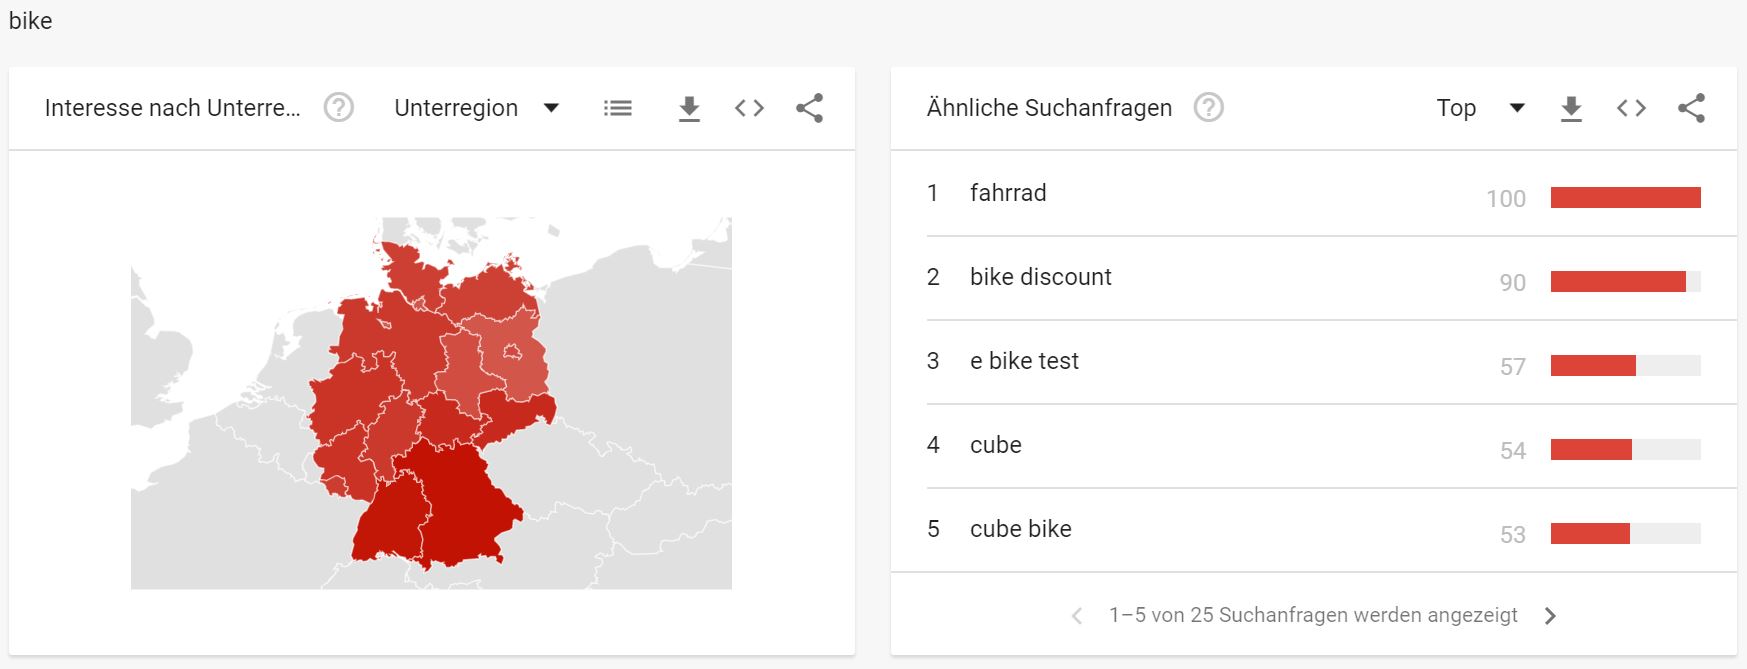 Google Trends - Interessante Suchbegriffe Fahrradbranche - Bike